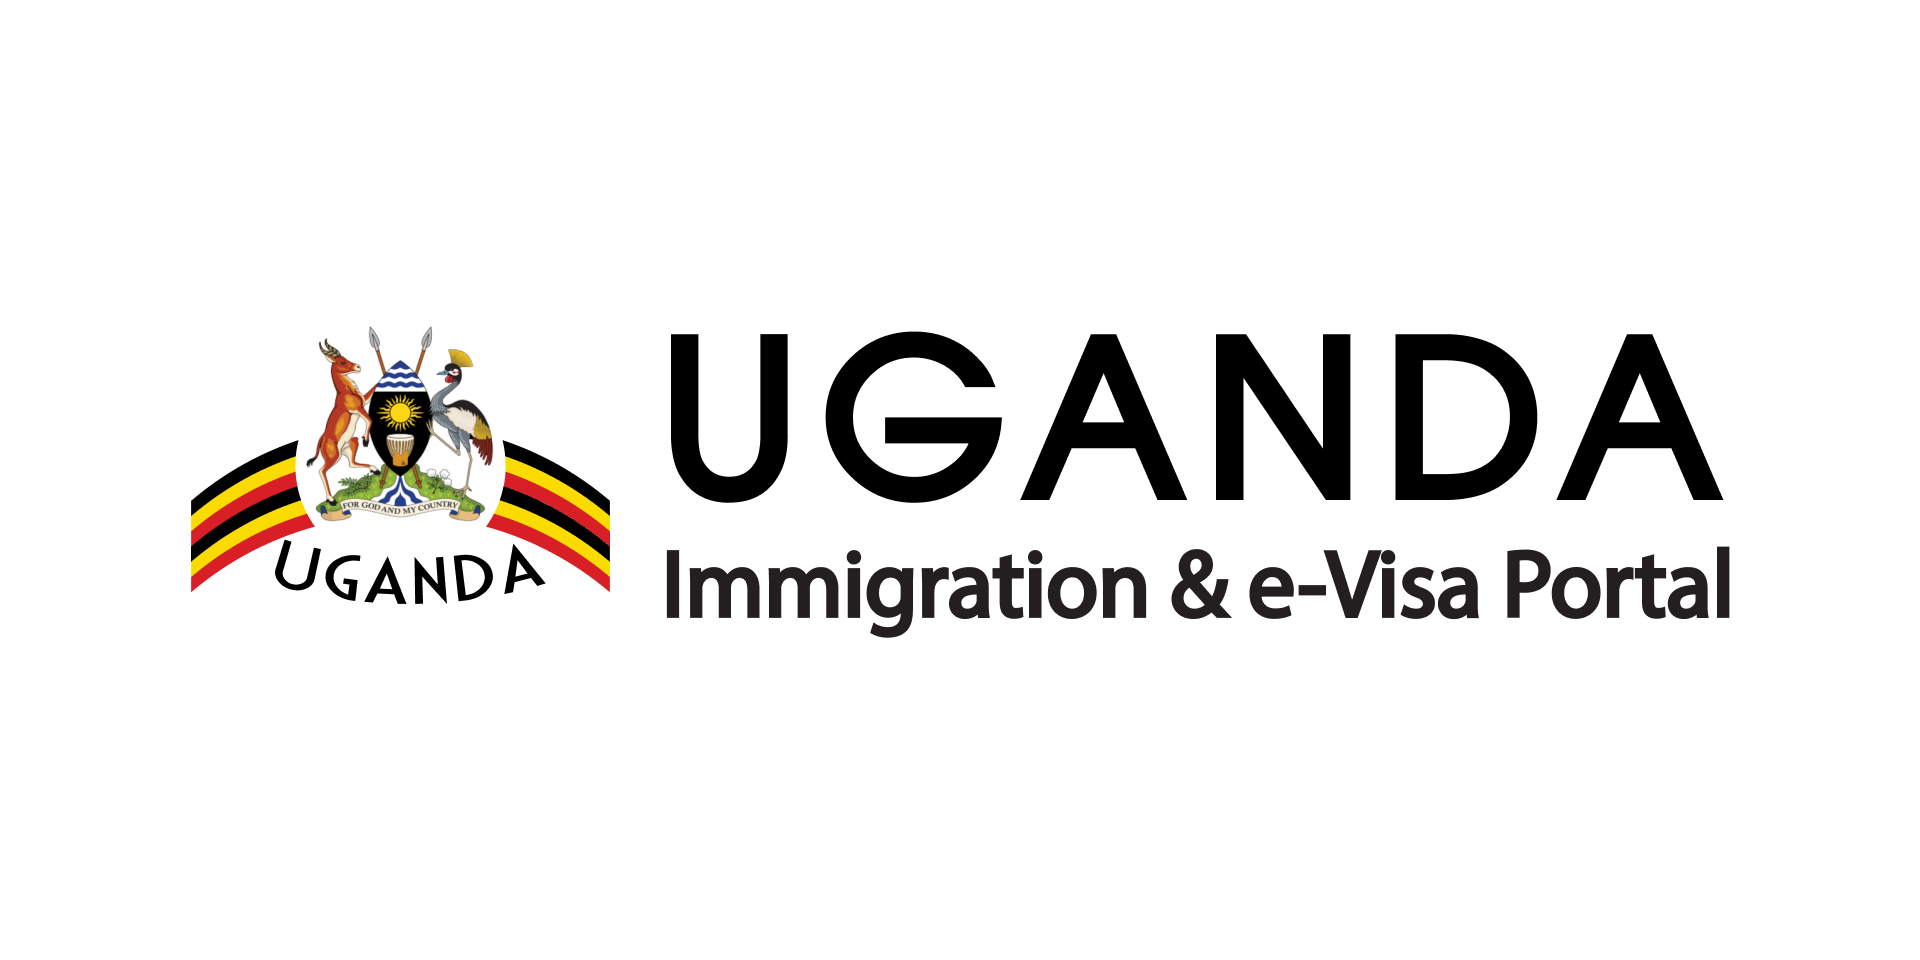 Cual es la capital de uganda